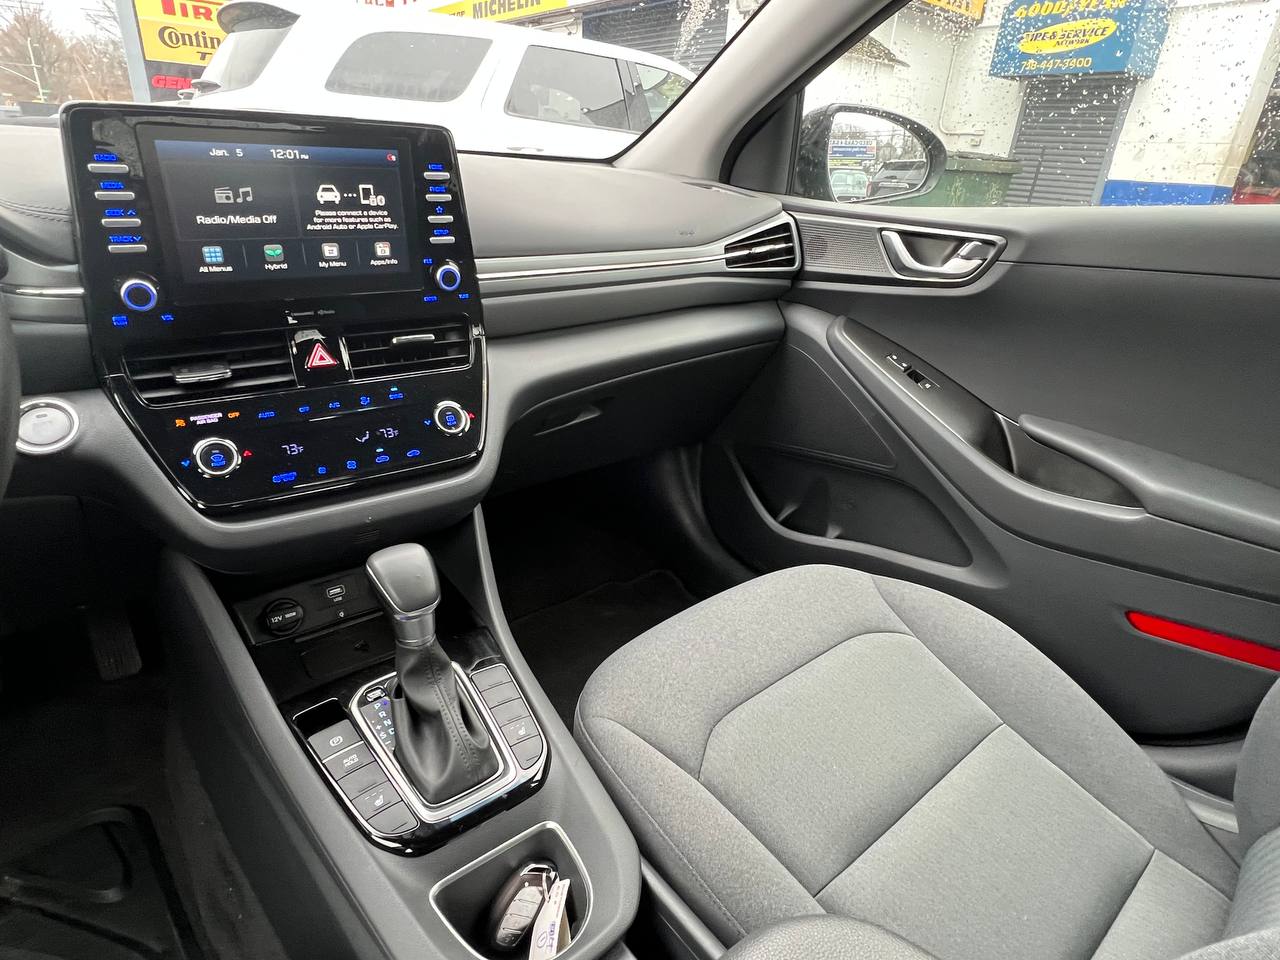 Used - Hyundai Ioniq Hybrid Hatchback for sale in Staten Island NY